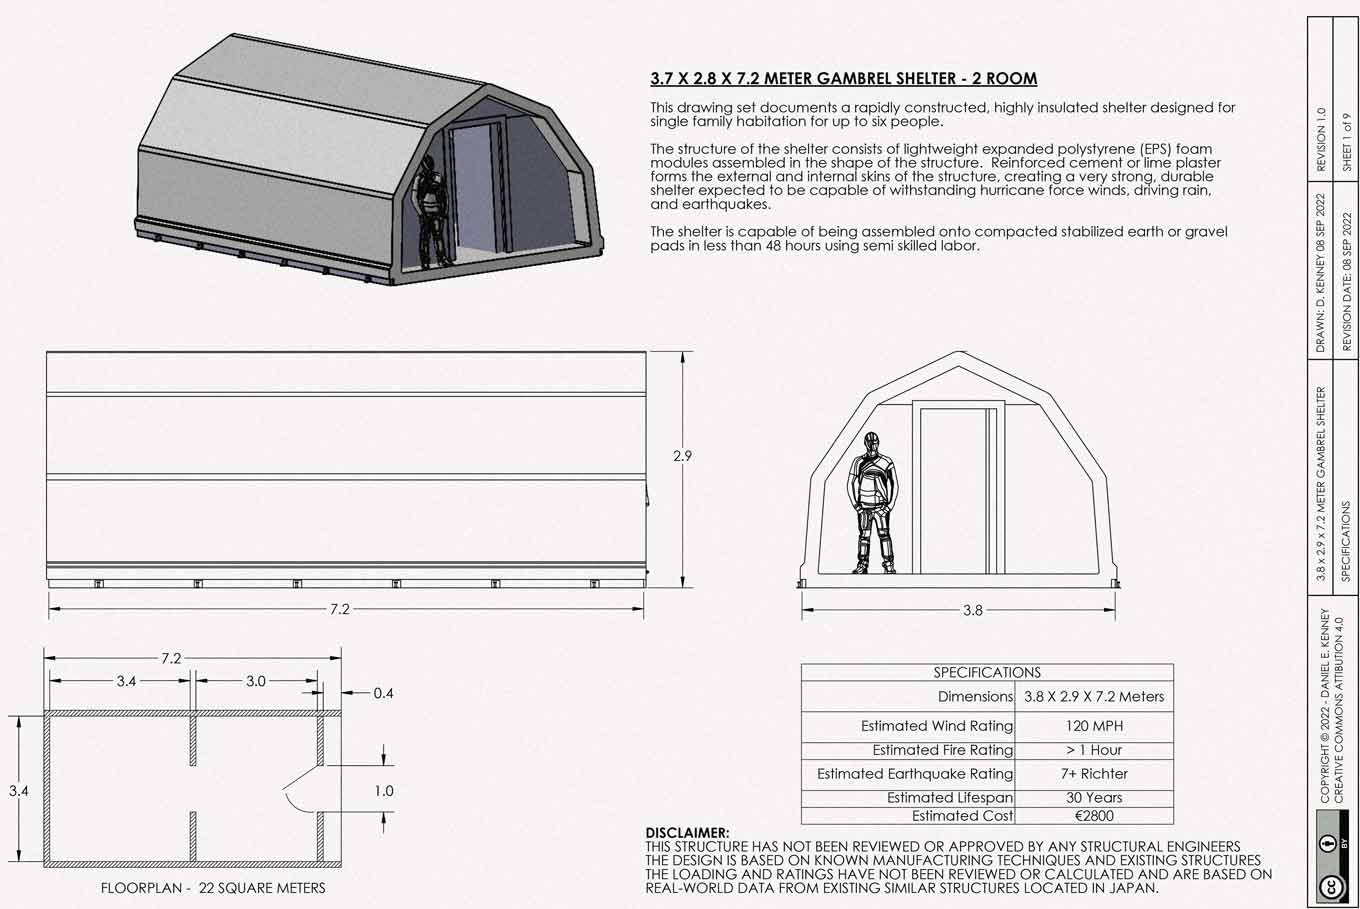 Document outlining details for a gembrel shelter